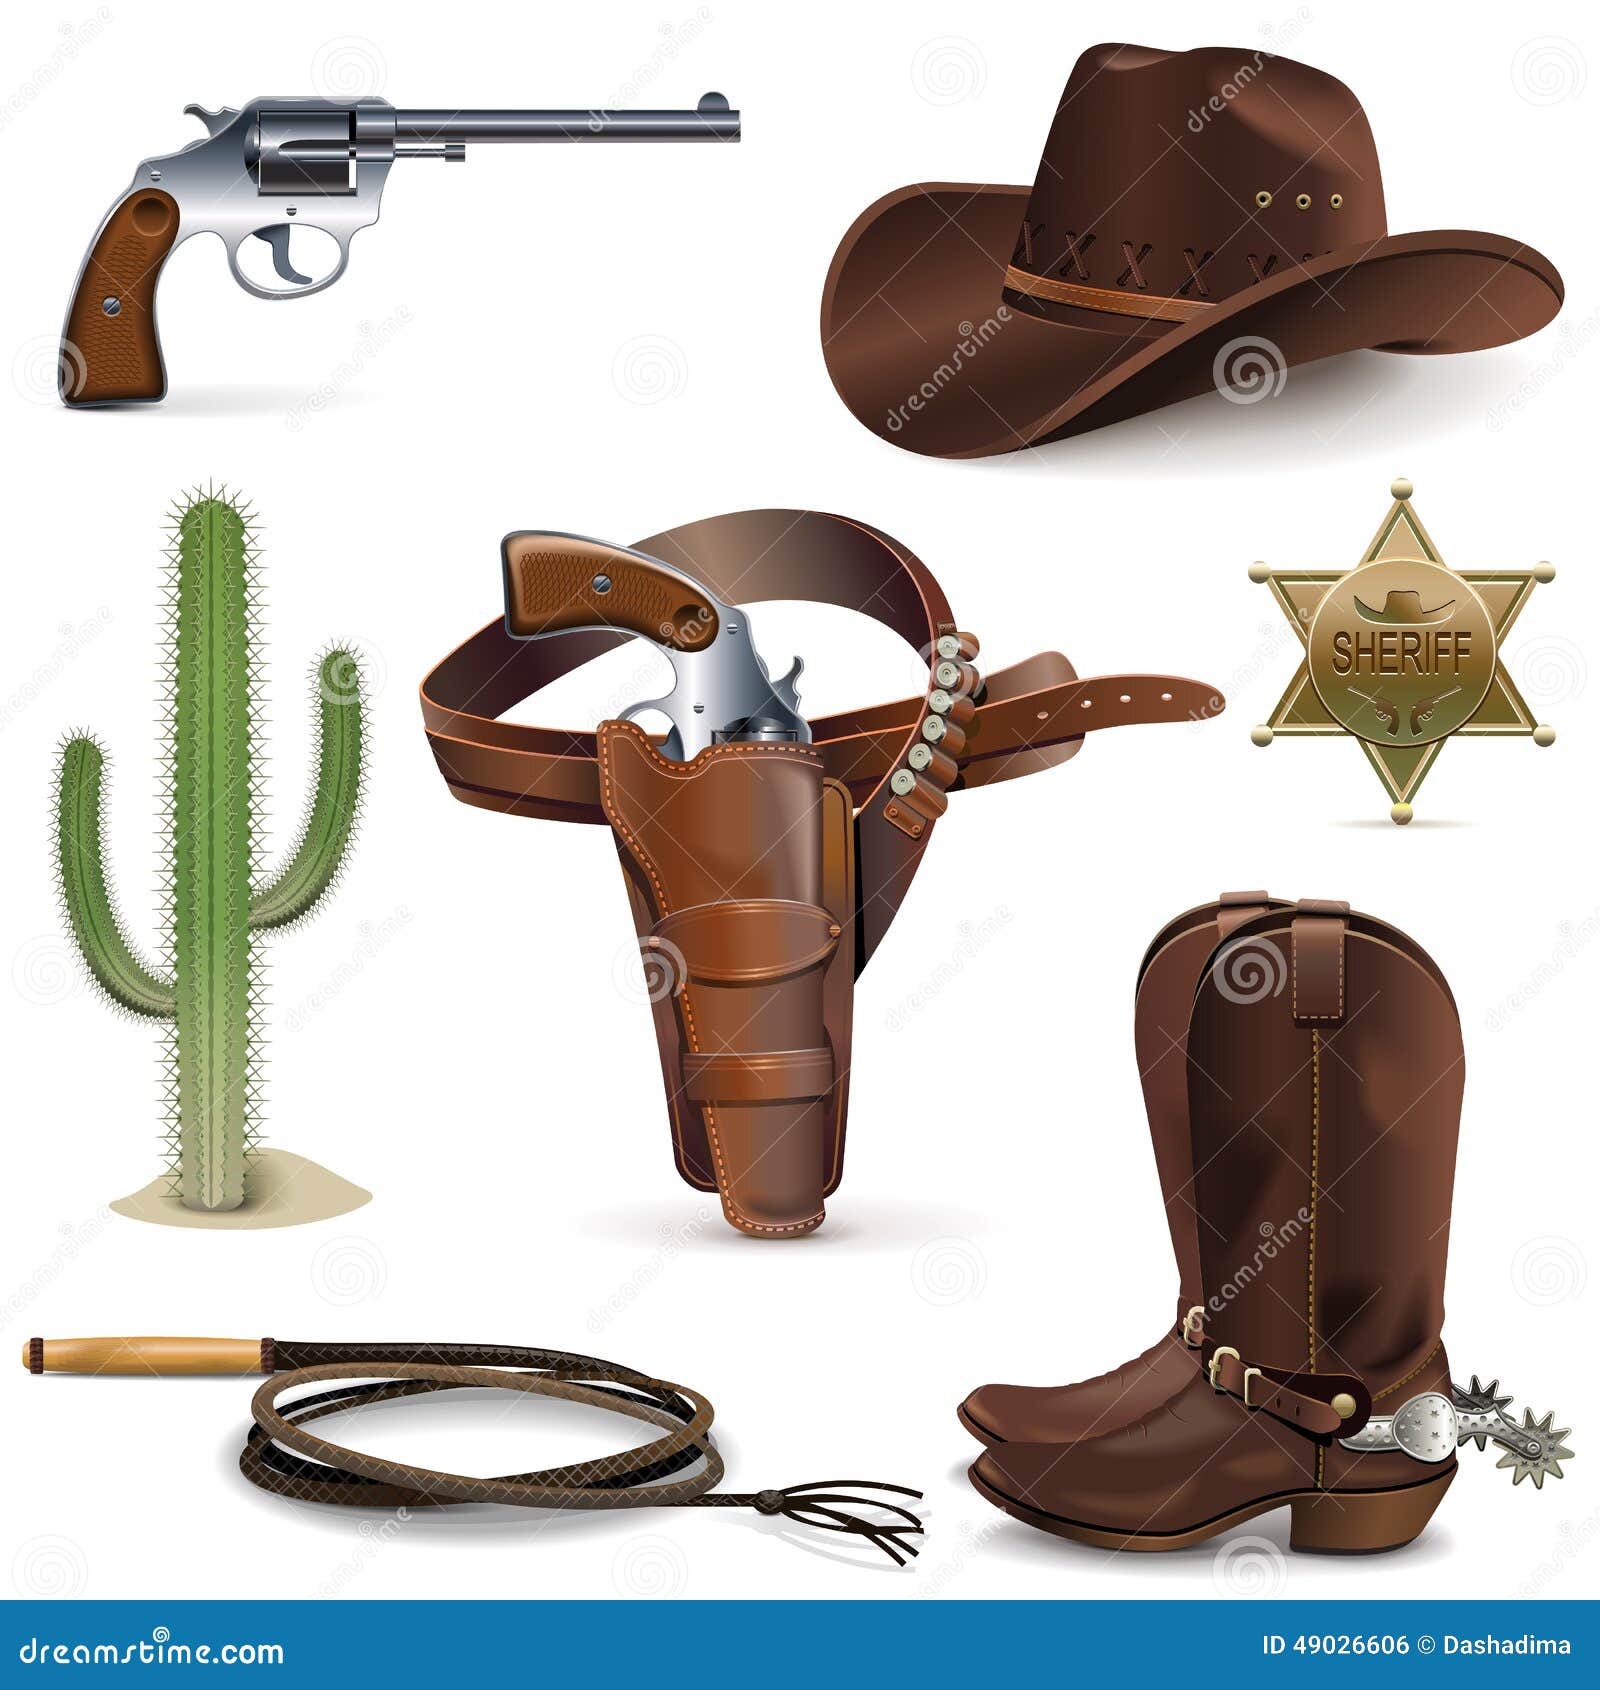  cowboy icons